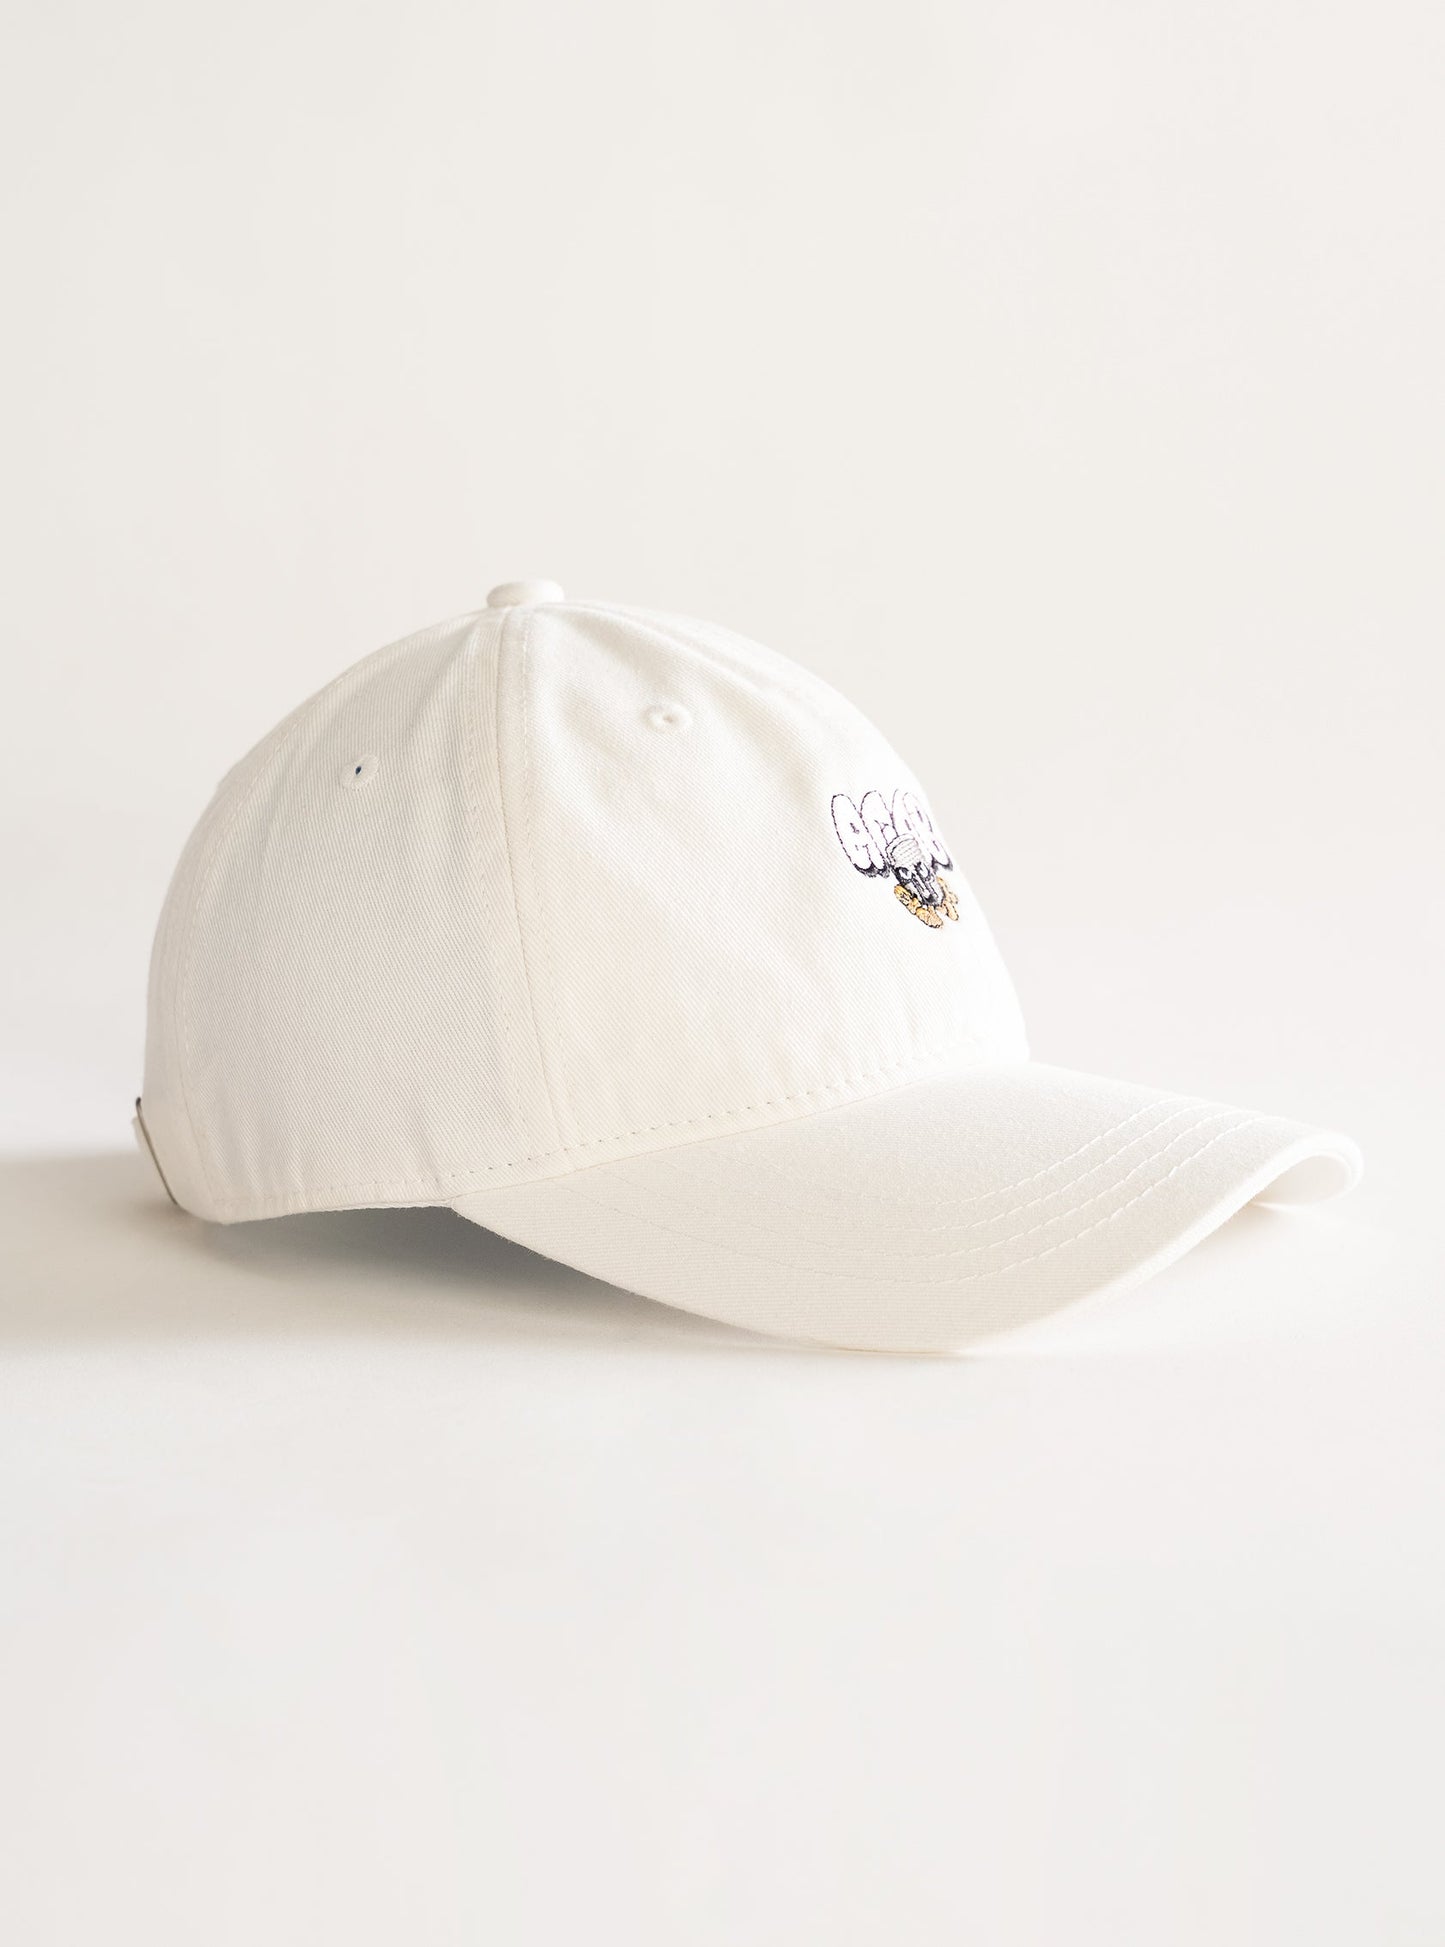 ACAB White Hat, Blanco